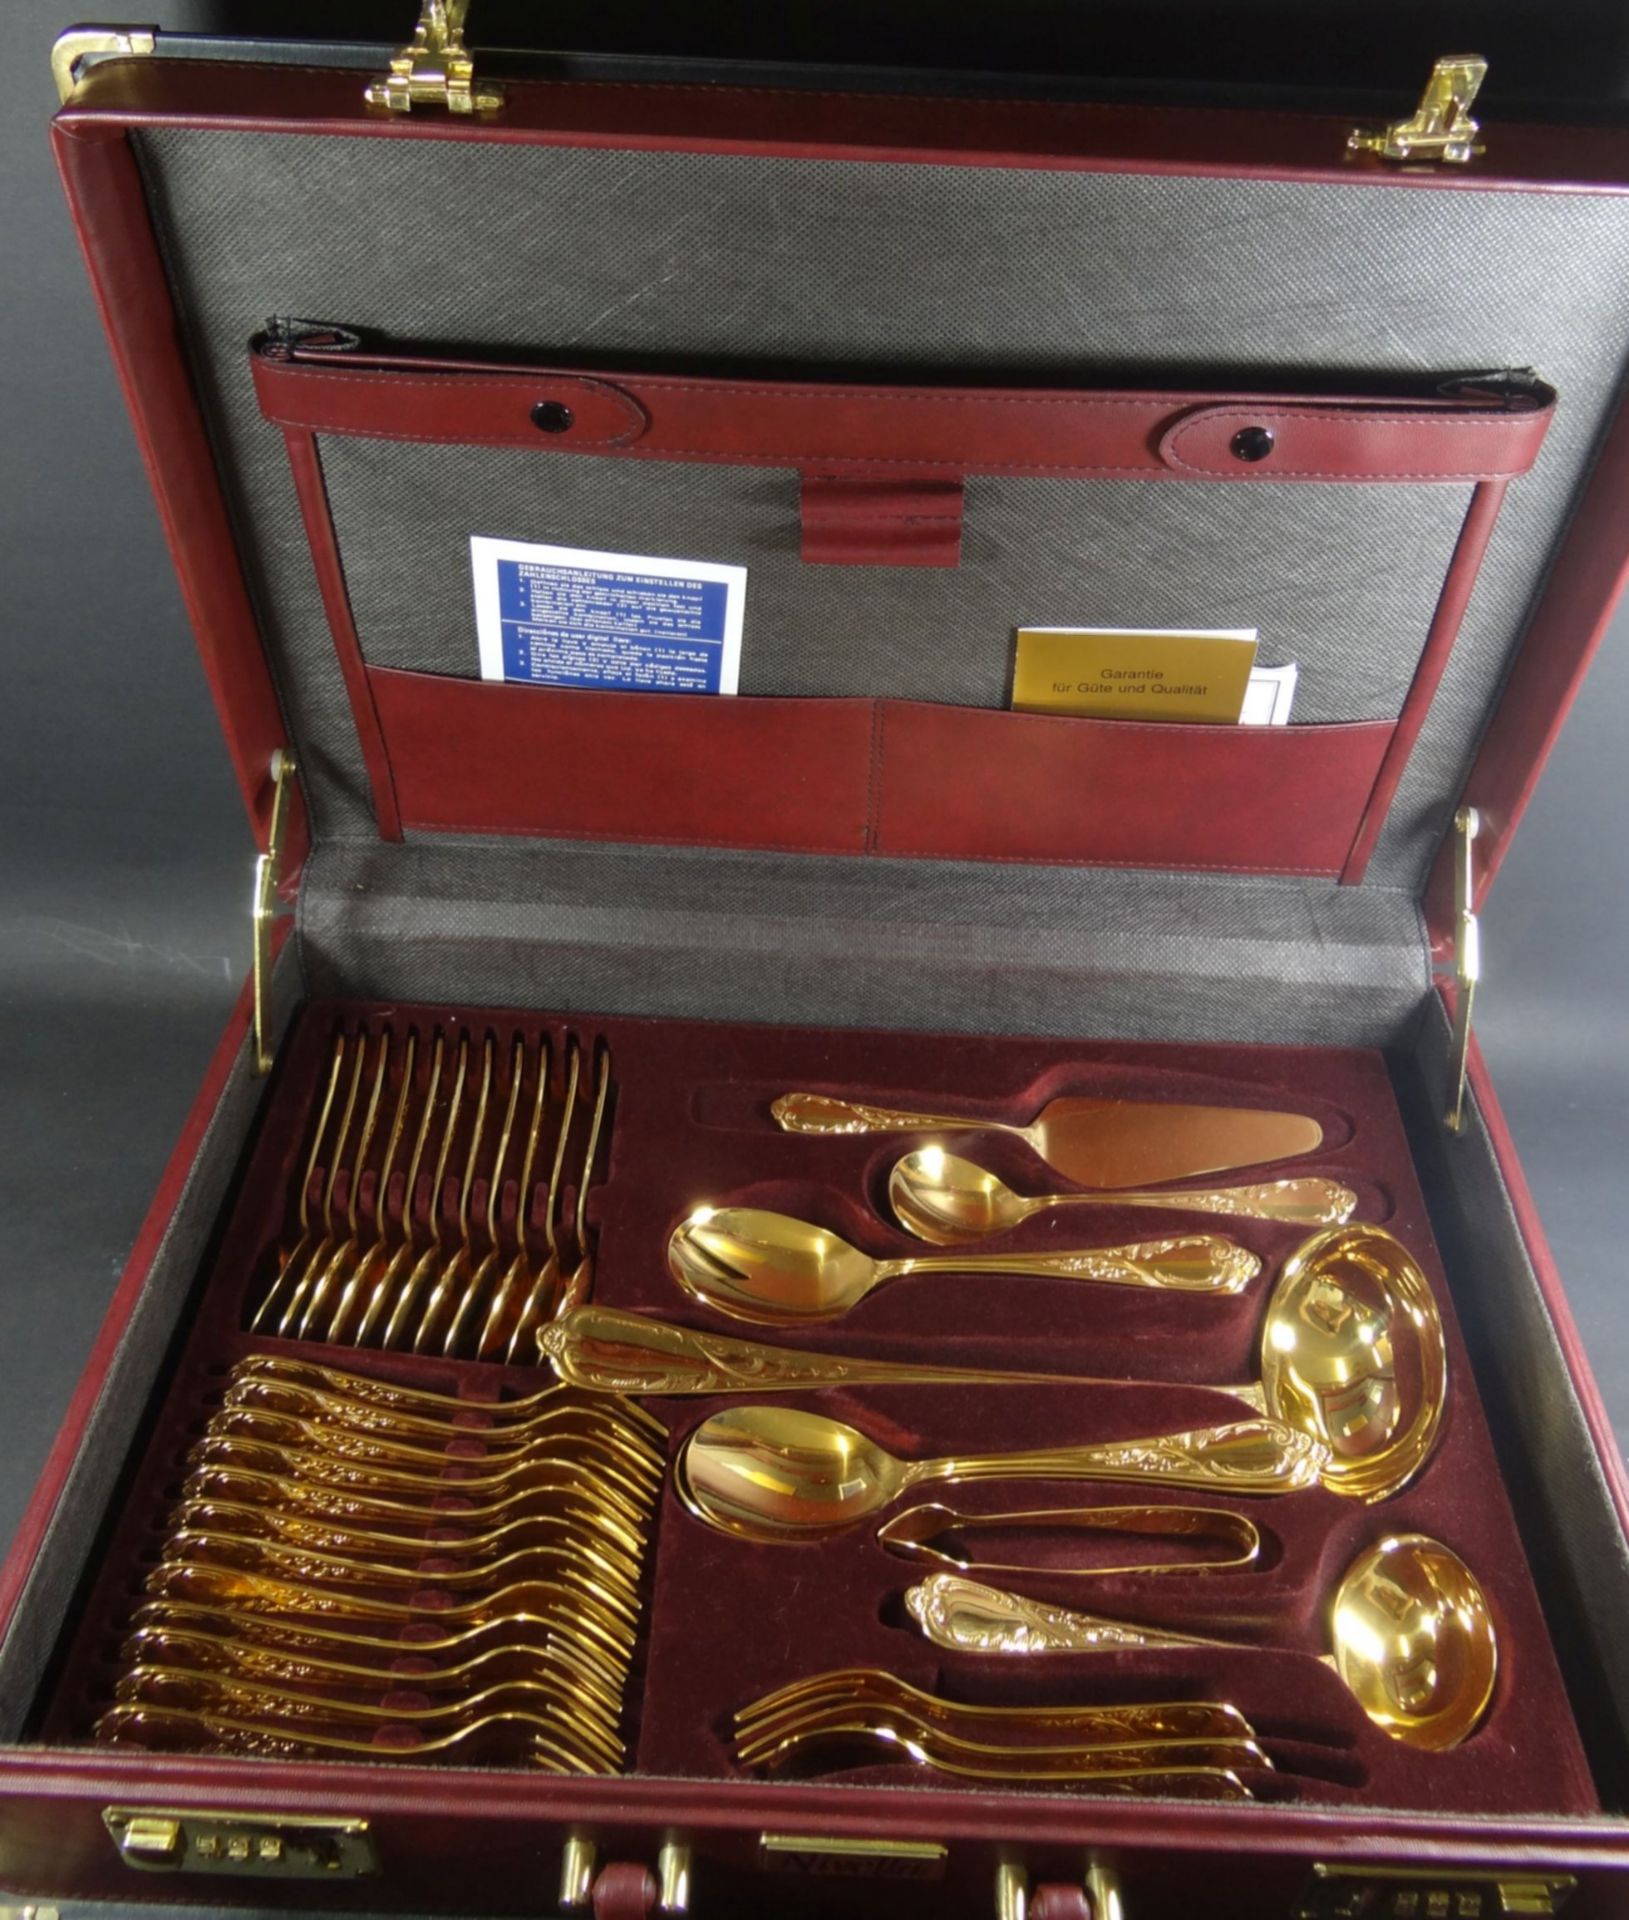 Koffer mit Besteck "Nivella" Solingen, vergoldet, 70 Teile, komplett für 12 Personen, neuwertig